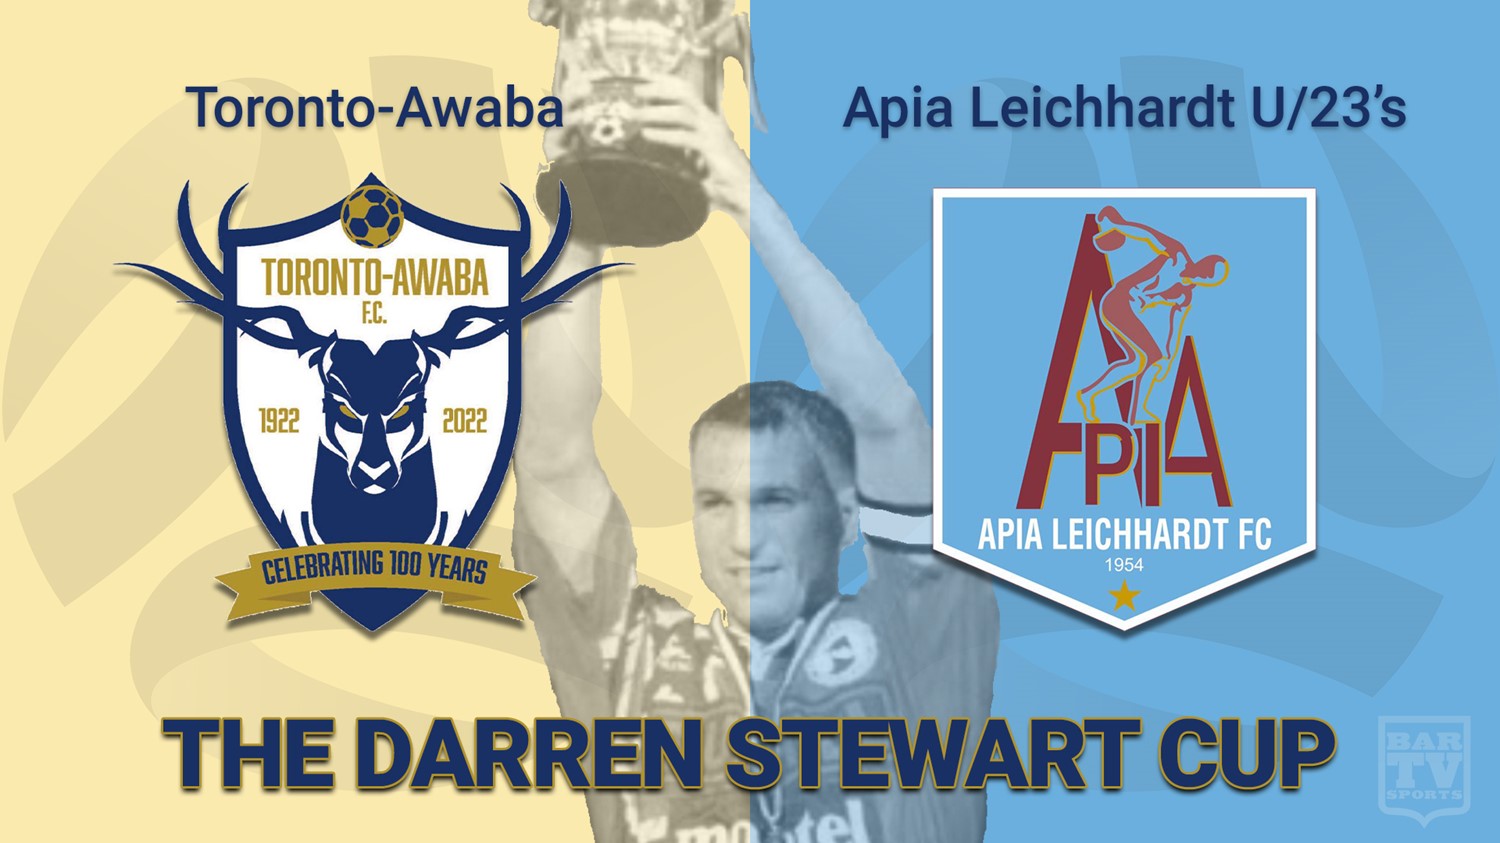 220206-NNSW NPL Darren Stewart Cup - Toronto Awaba FC v APIA Leichhardt Minigame Slate Image